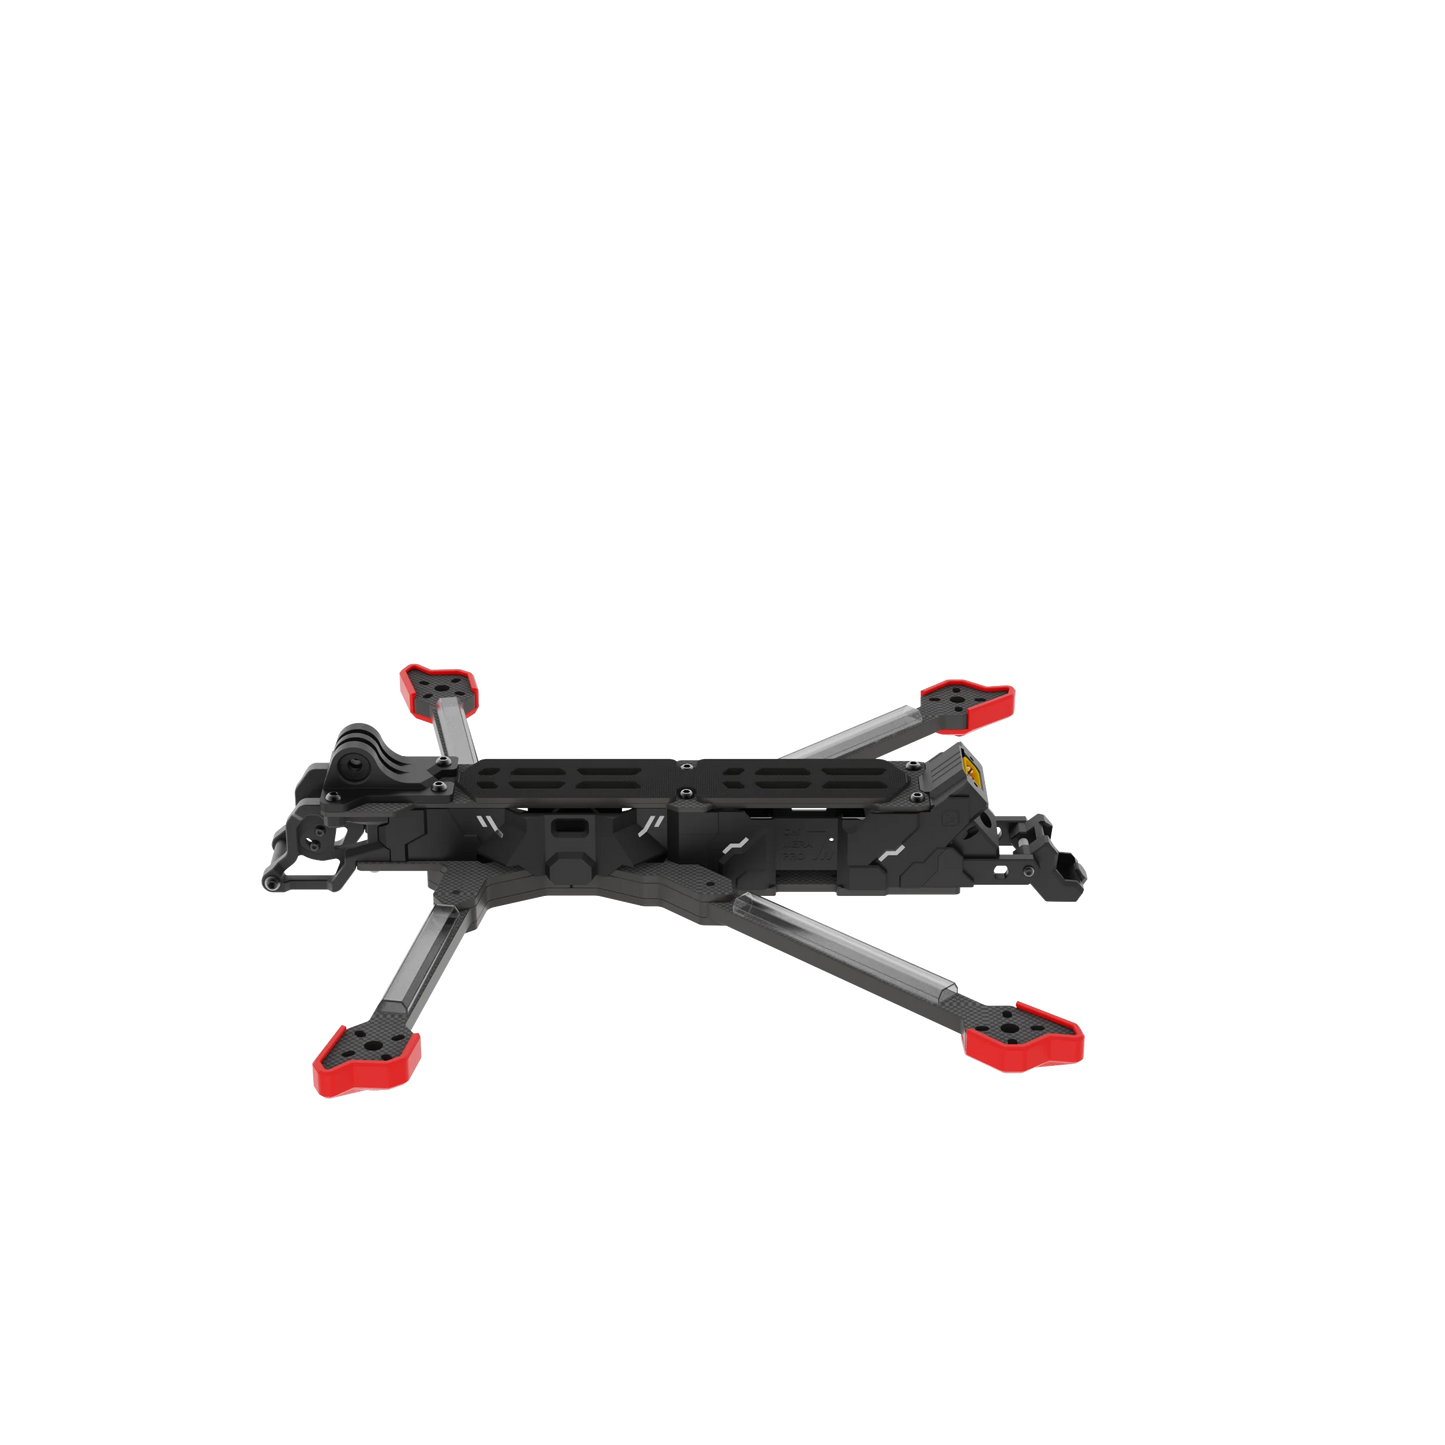 iFlight Chimera7 Pro V2 Frame Kit with 6mm arm for FPV Parts, RiotNook, Other, iflight-chimera7-pro-v2-frame-kit-with-6mm-arm-for-fpv-parts-1473540543, Drones & Accessories, RiotNook